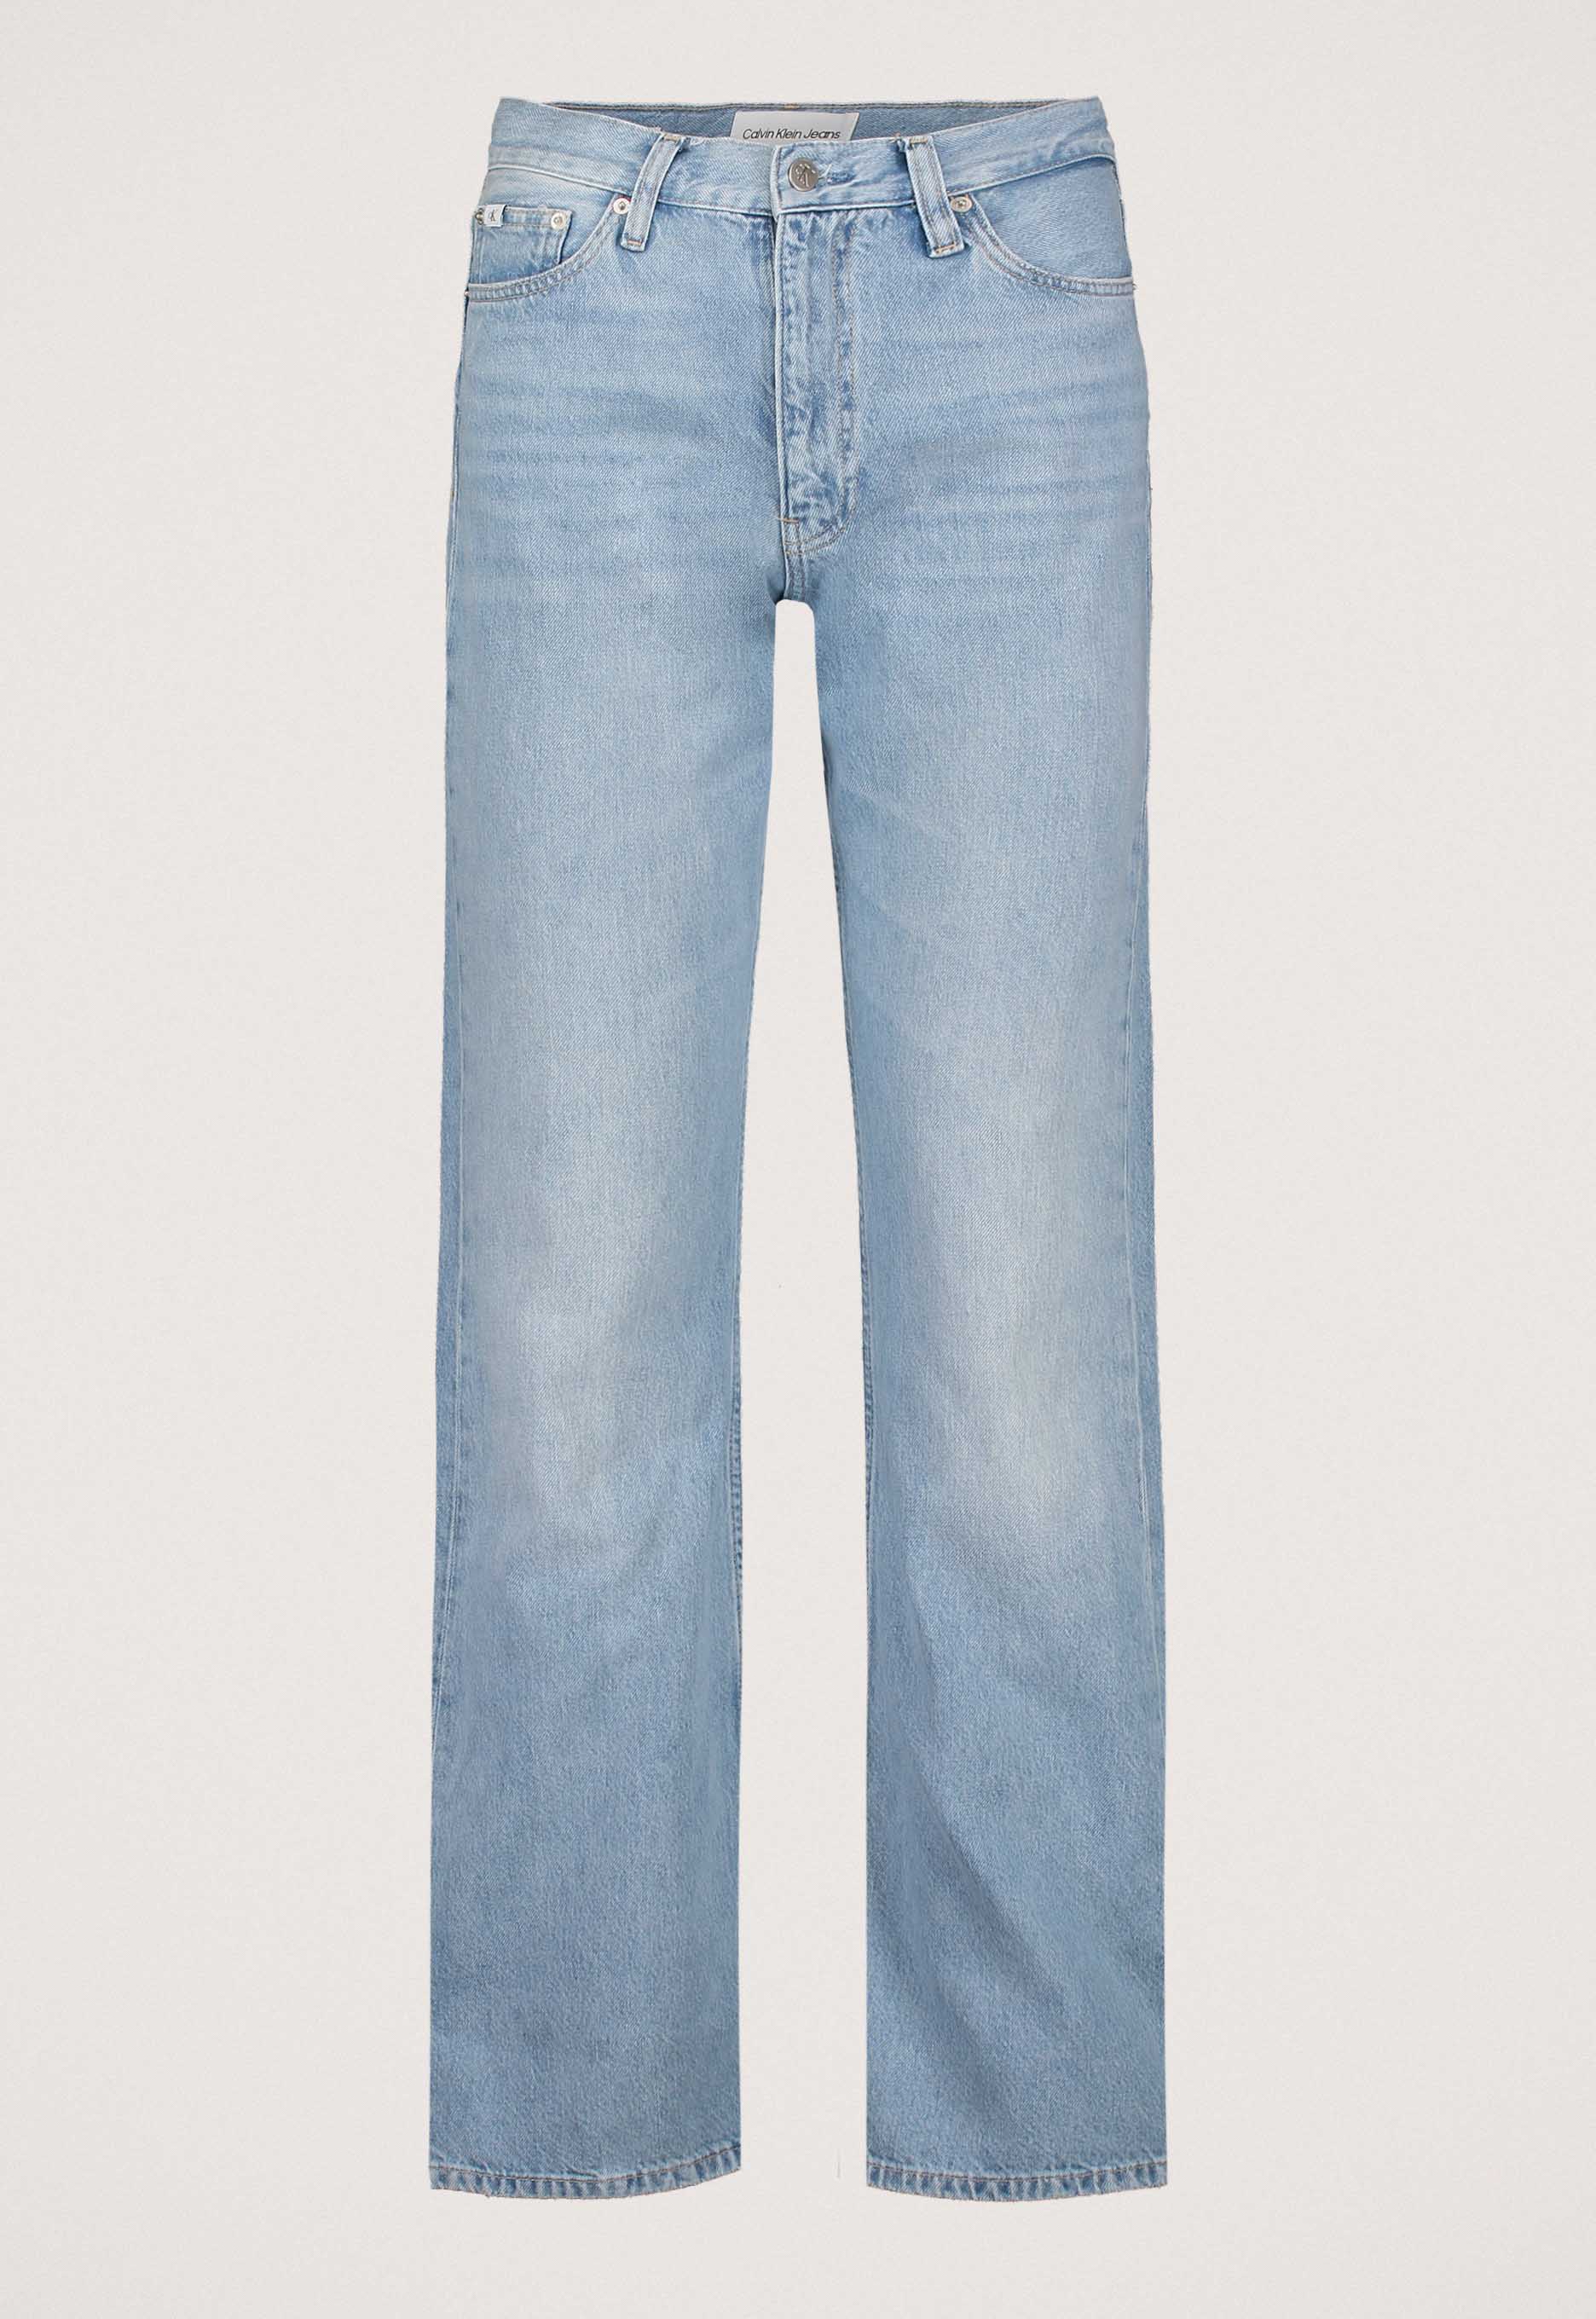 Calvin klein Authentic Bootcut Jeans